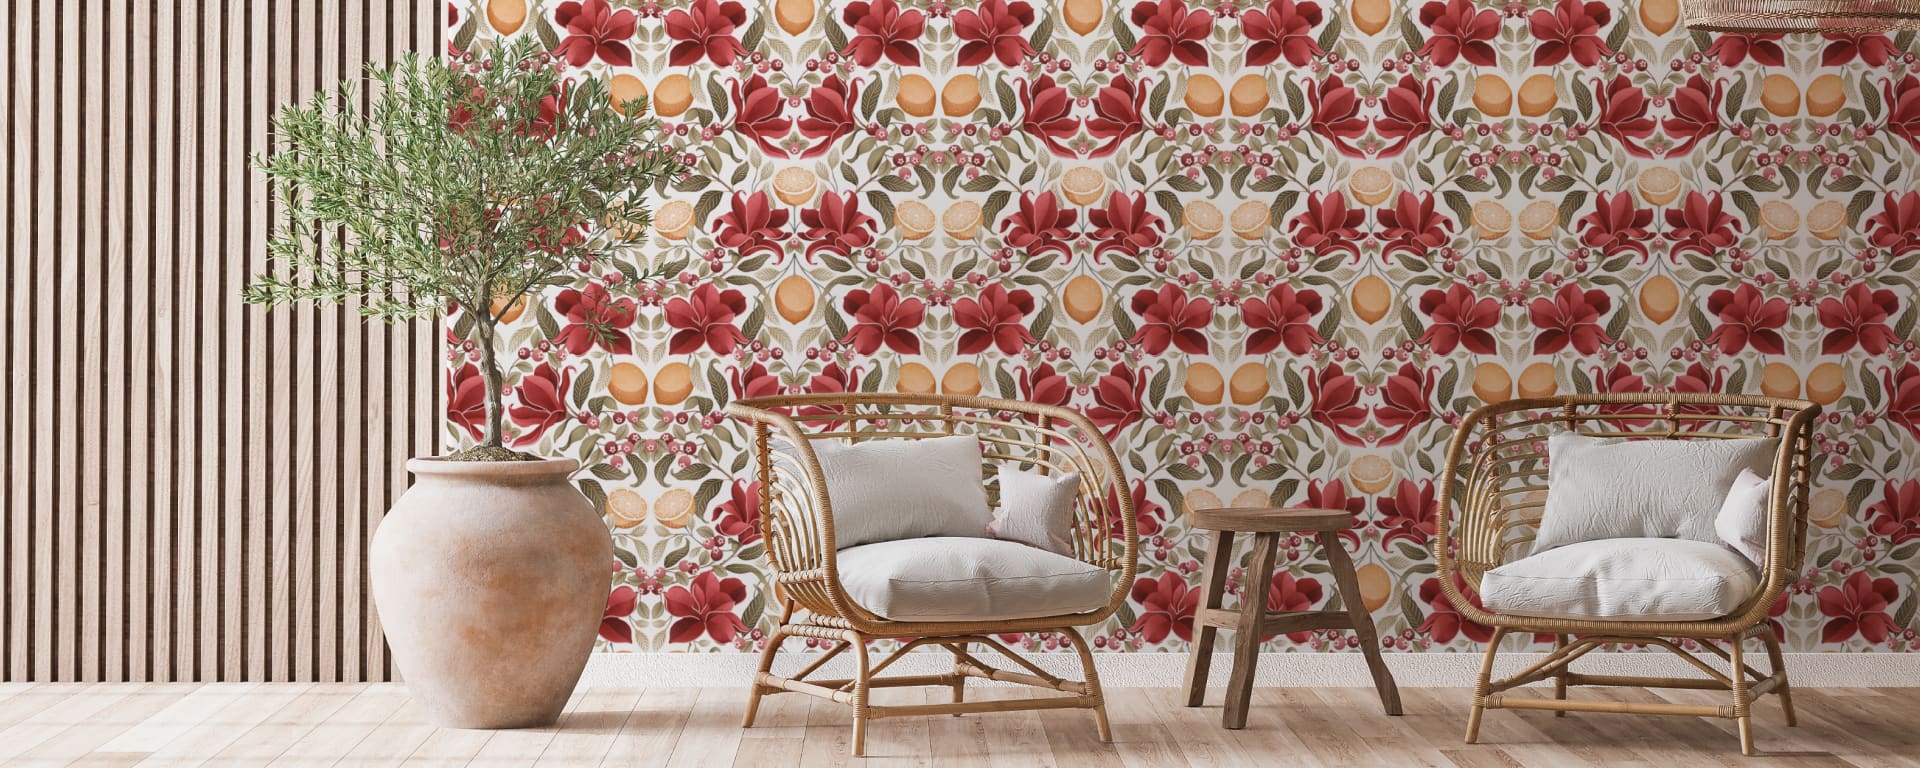 Lemons and Magnolia Wallpaper - by Wallpaper Republic - Colourway: Crimson and Olive - Hero Image - Insitu